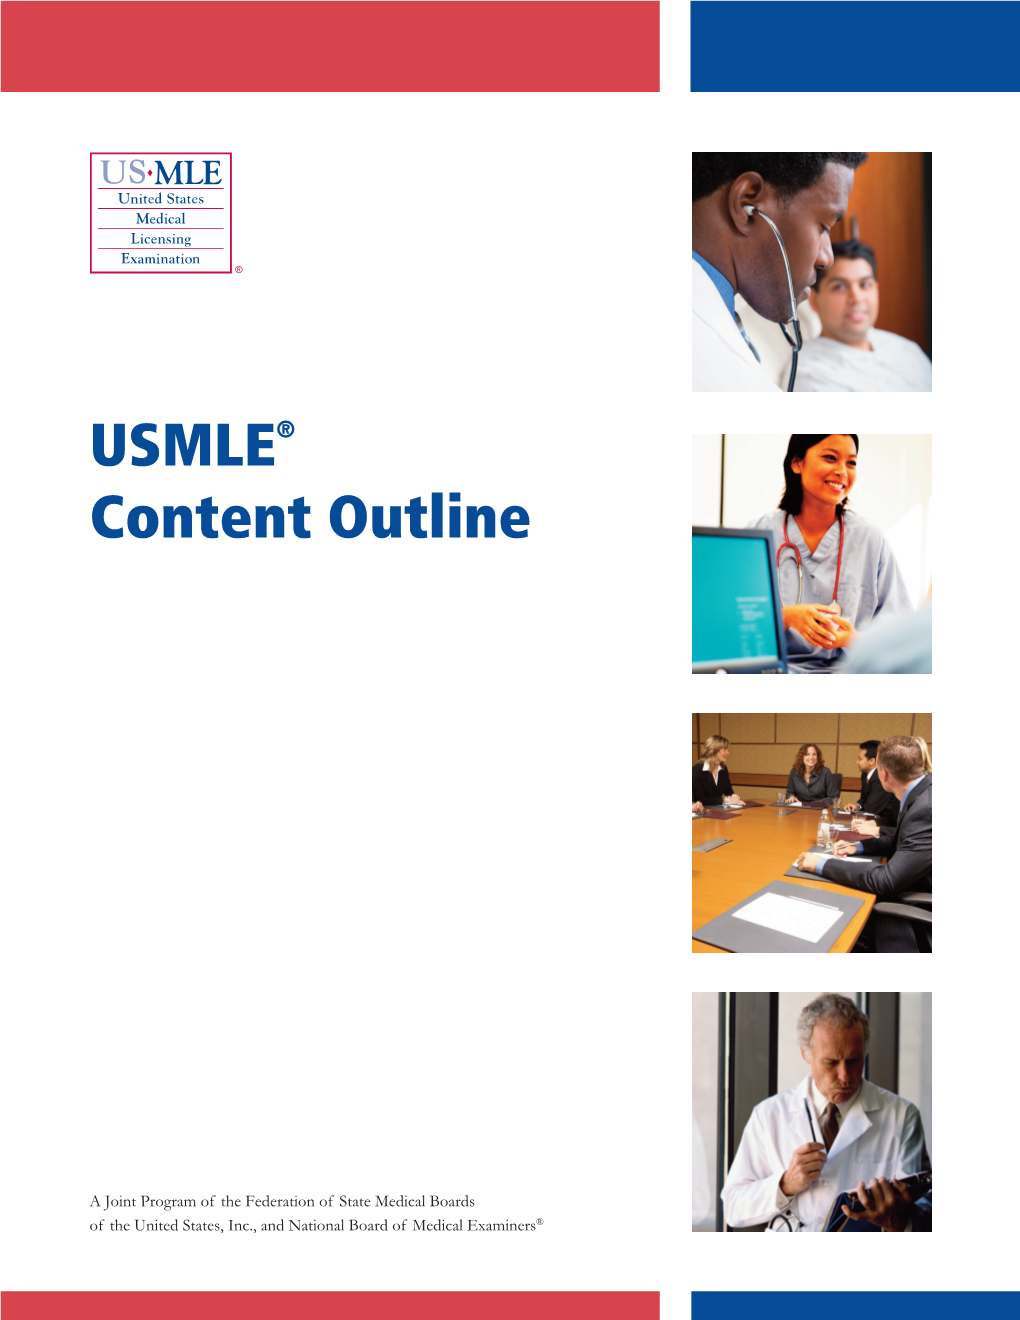 USMLE Content Outline